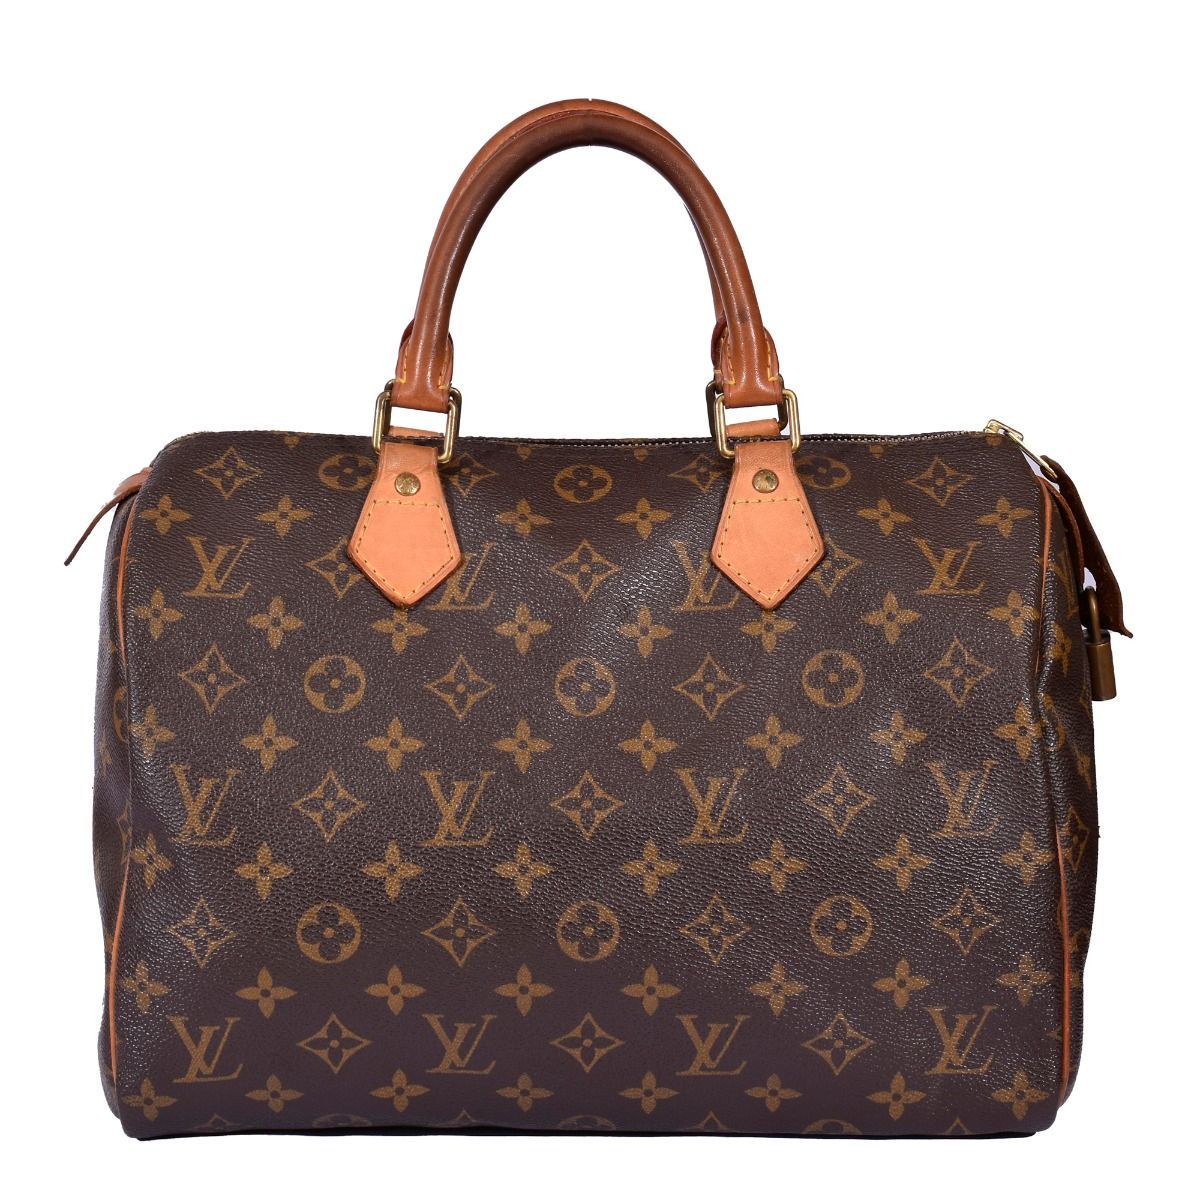 Louis Vuitton - Authenticated Speedy Bandoulière Handbag - Leather Brown For Woman, Good condition